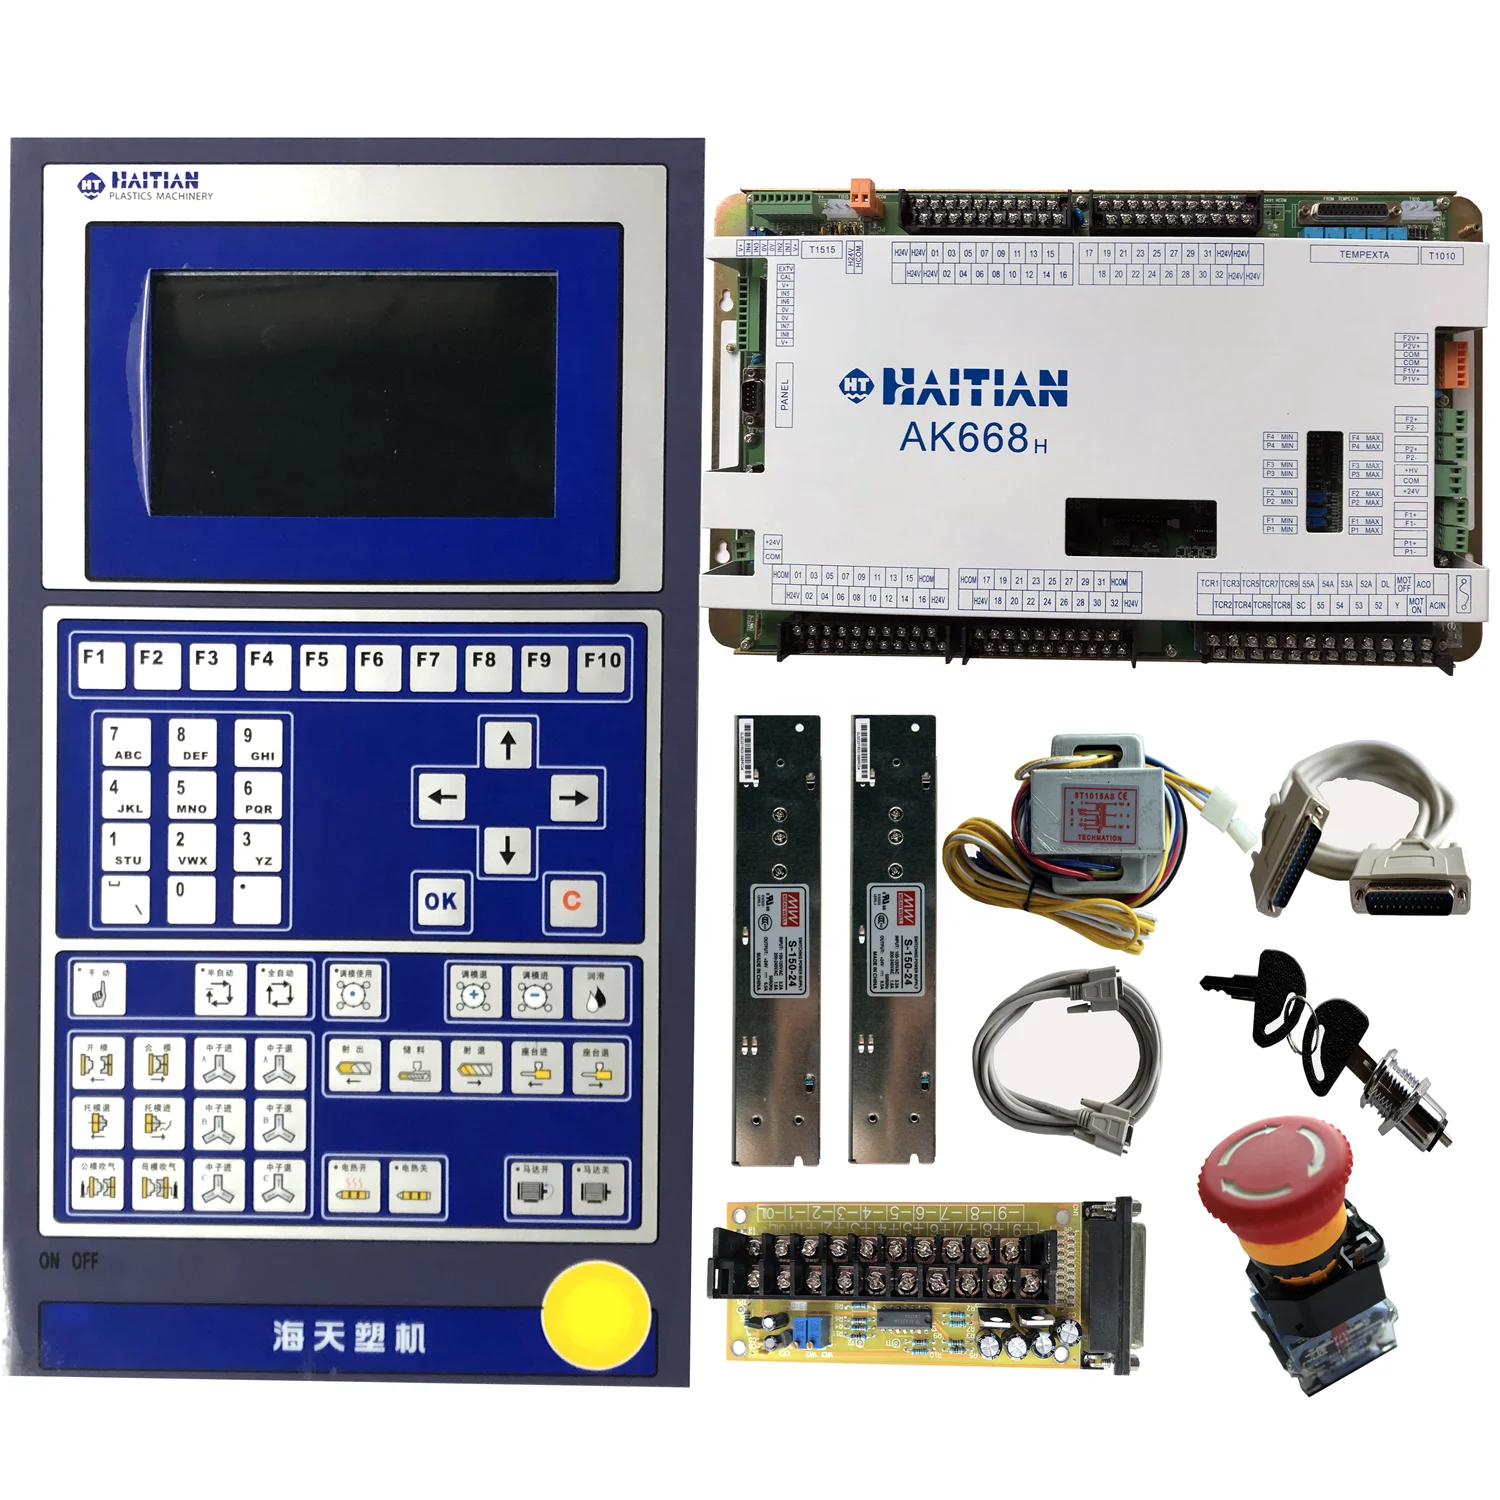 

HAITIAN AK668 control system + HMI- Q7 panel , TECHMATION Brand full set PLC for molding machine